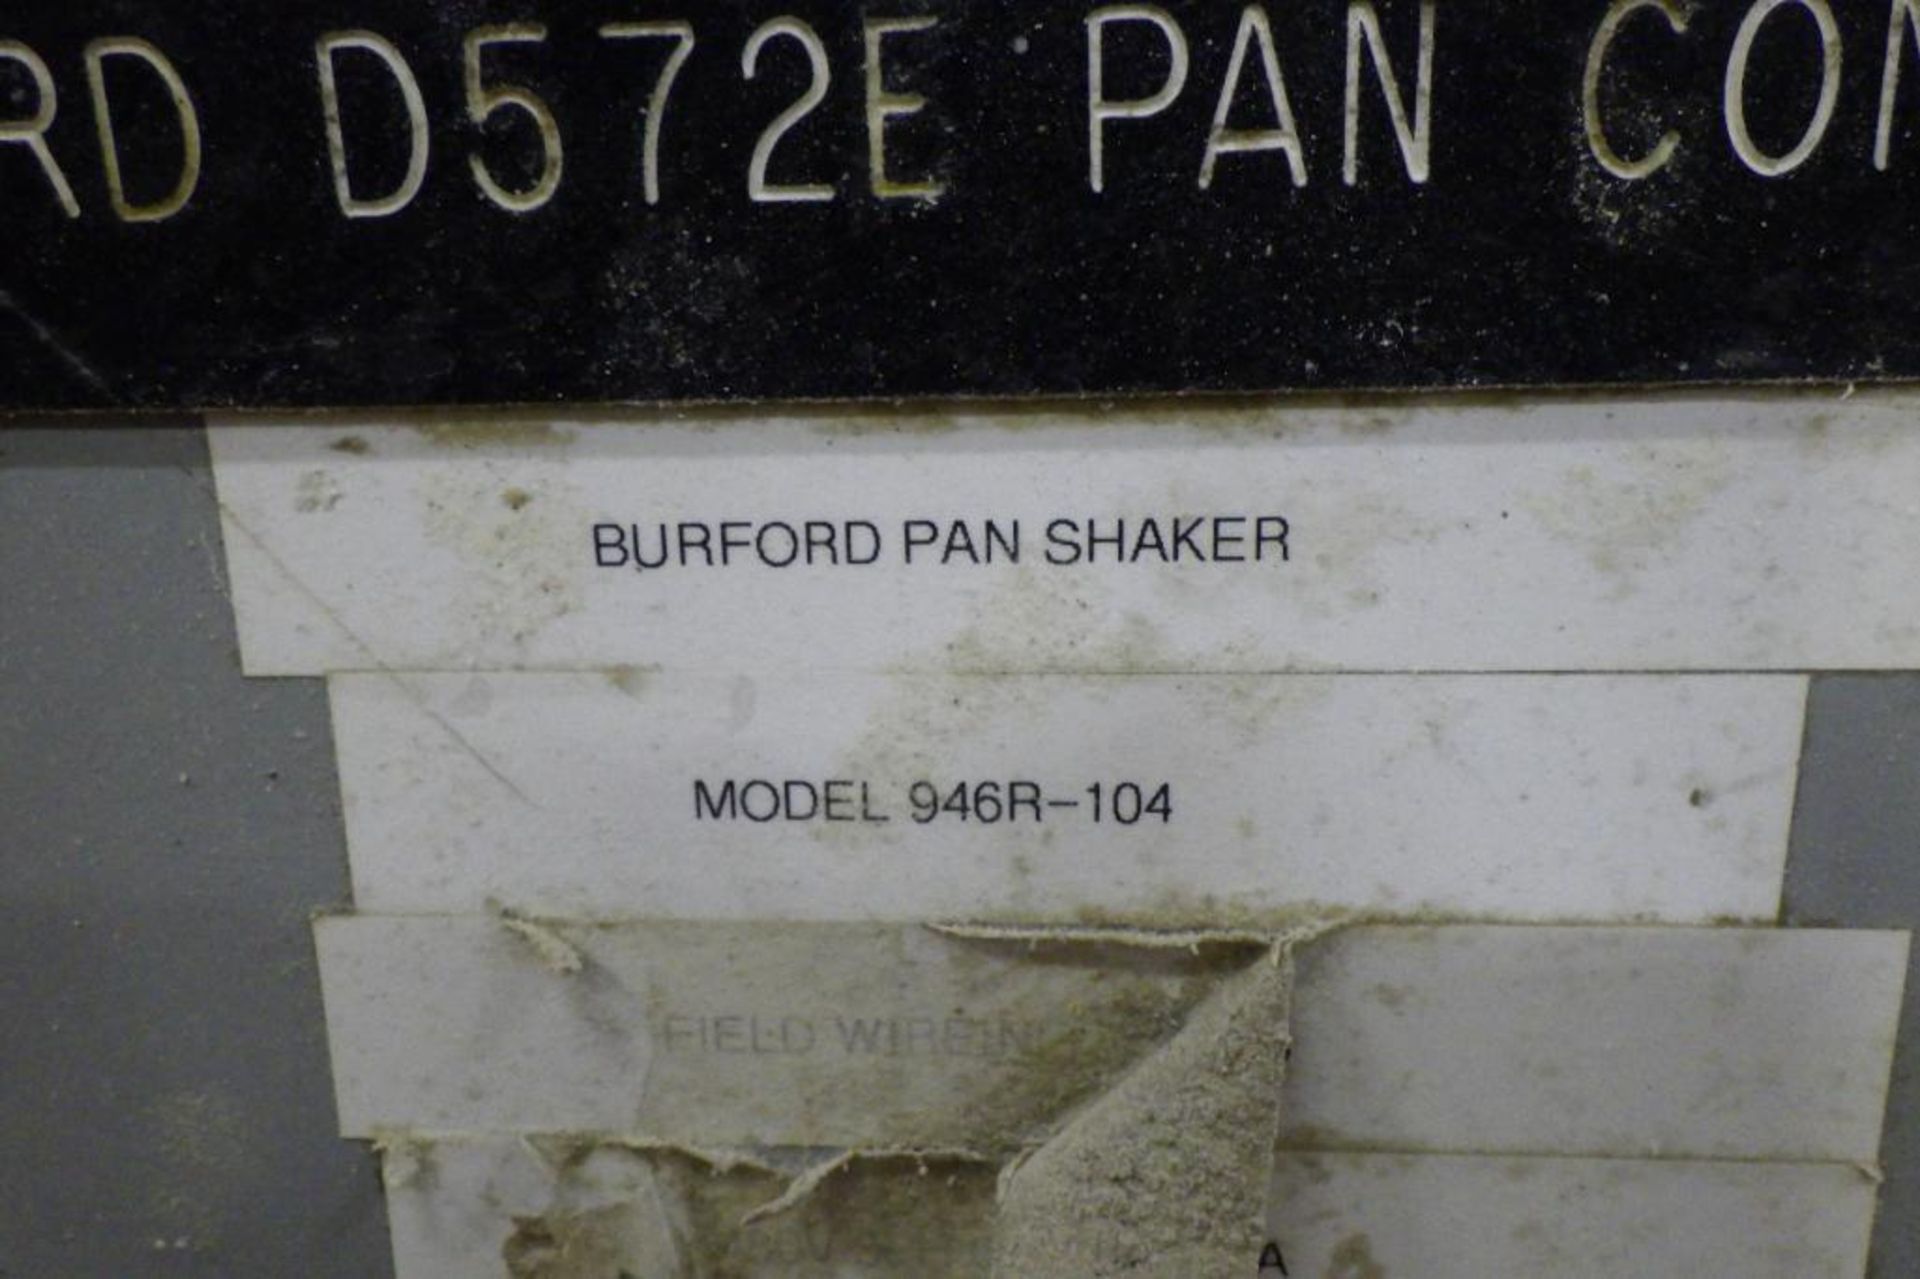 Burford pan controller conveyor and pan shaker - Image 16 of 16